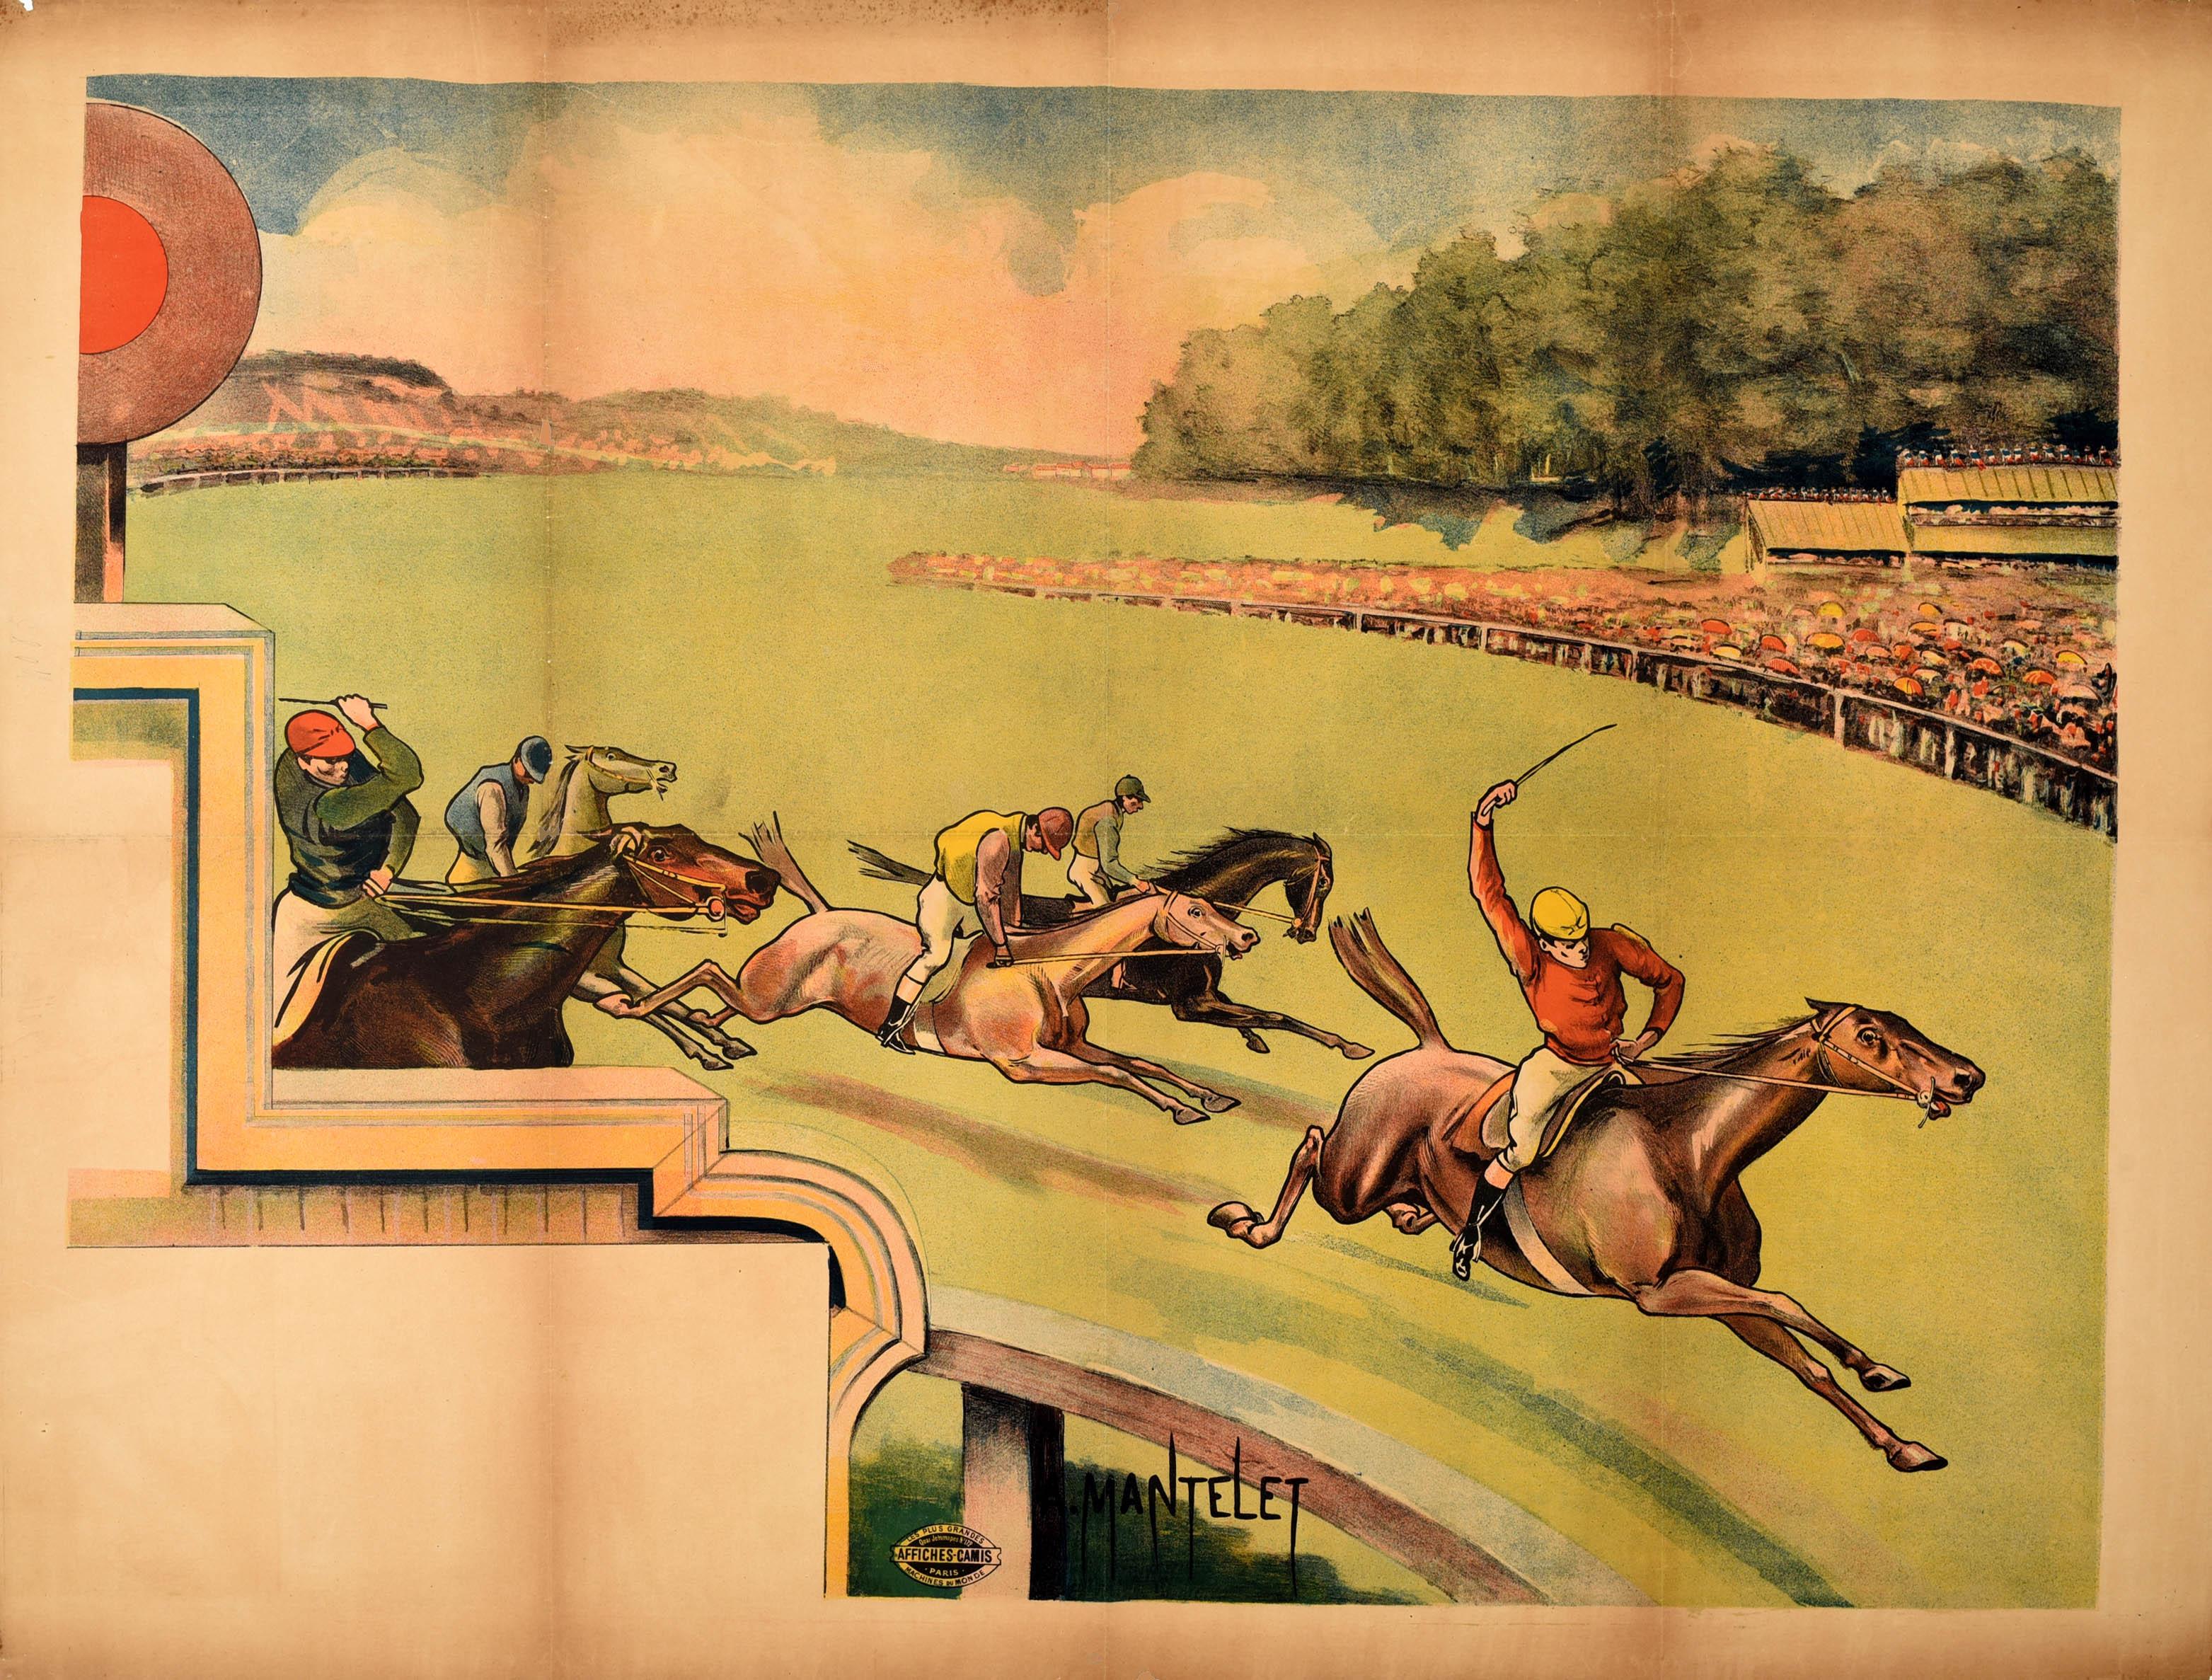 MANTELET Albert Print - Original Antique Poster Horse Race Jockey Equestrian Sport Artwork Finish Post